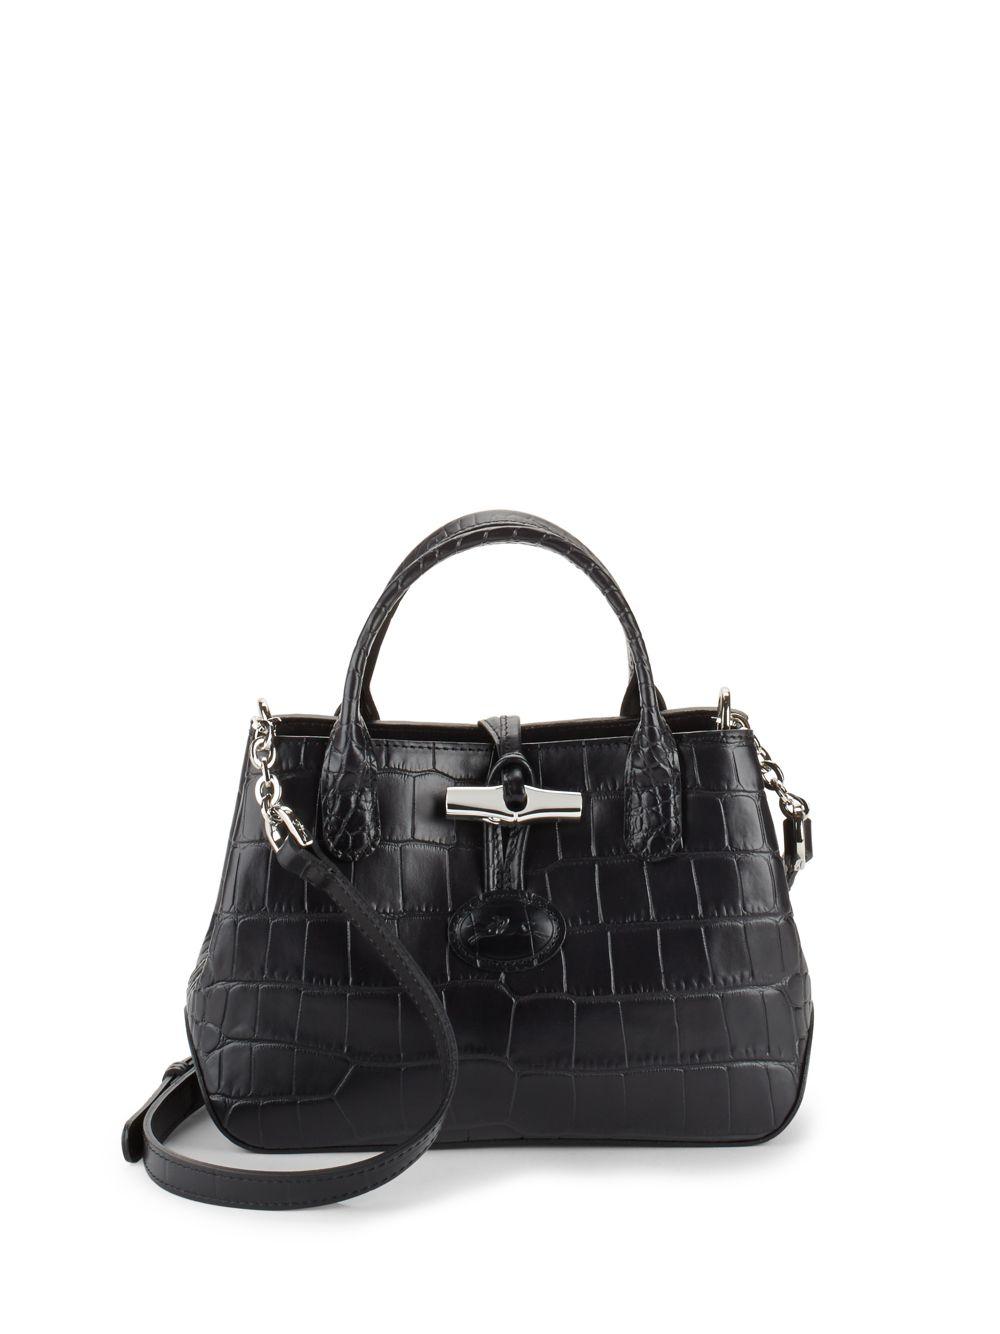 Longchamp Roseau Crossbody bag in black